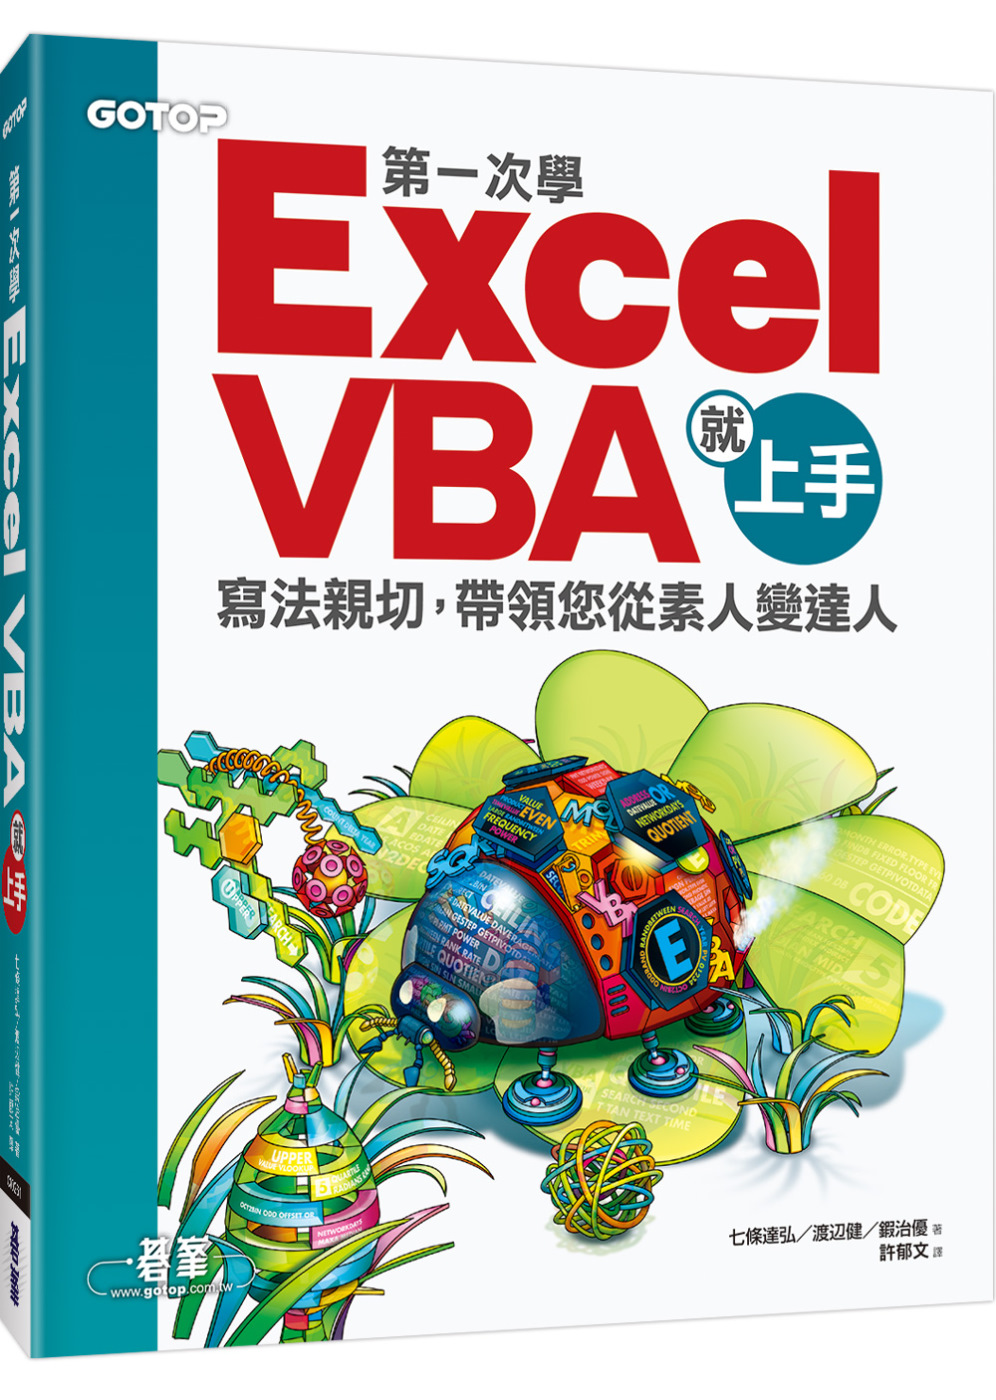 ►GO►最新優惠► 【書籍】第一次學Excel VBA就上手